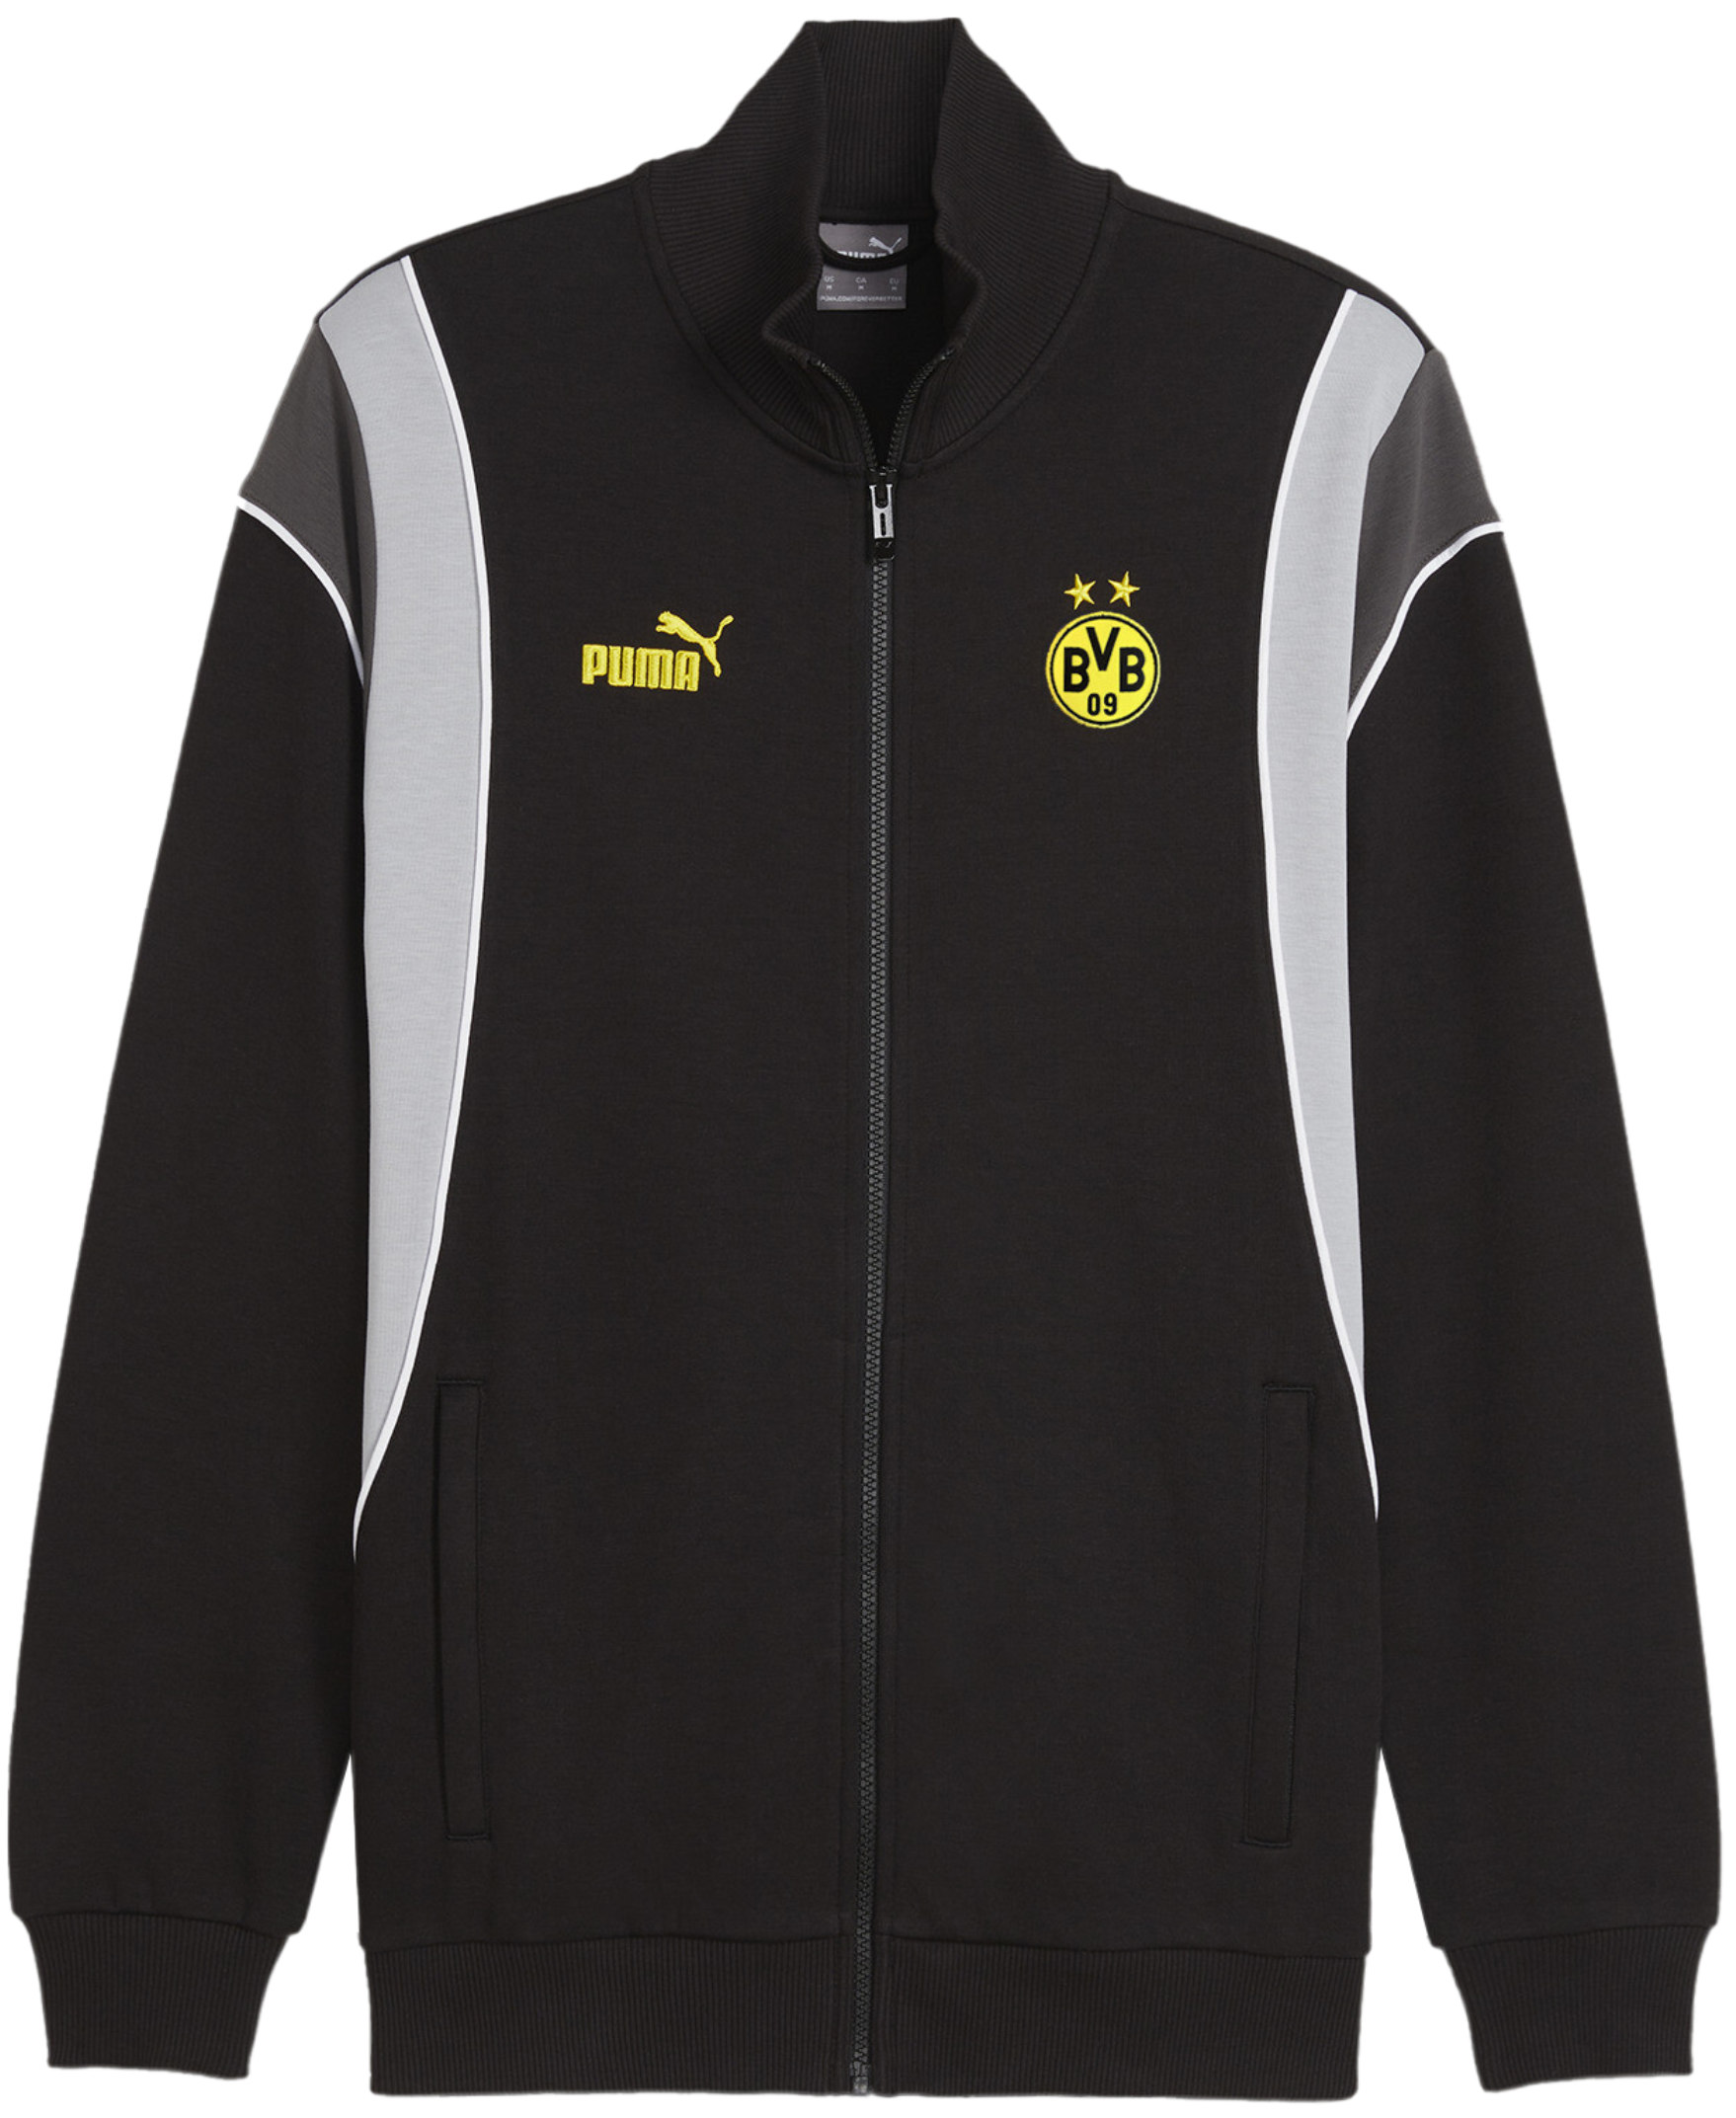 Kurtka Puma BVB Dortmund Ftbl Archive Trainings jacket